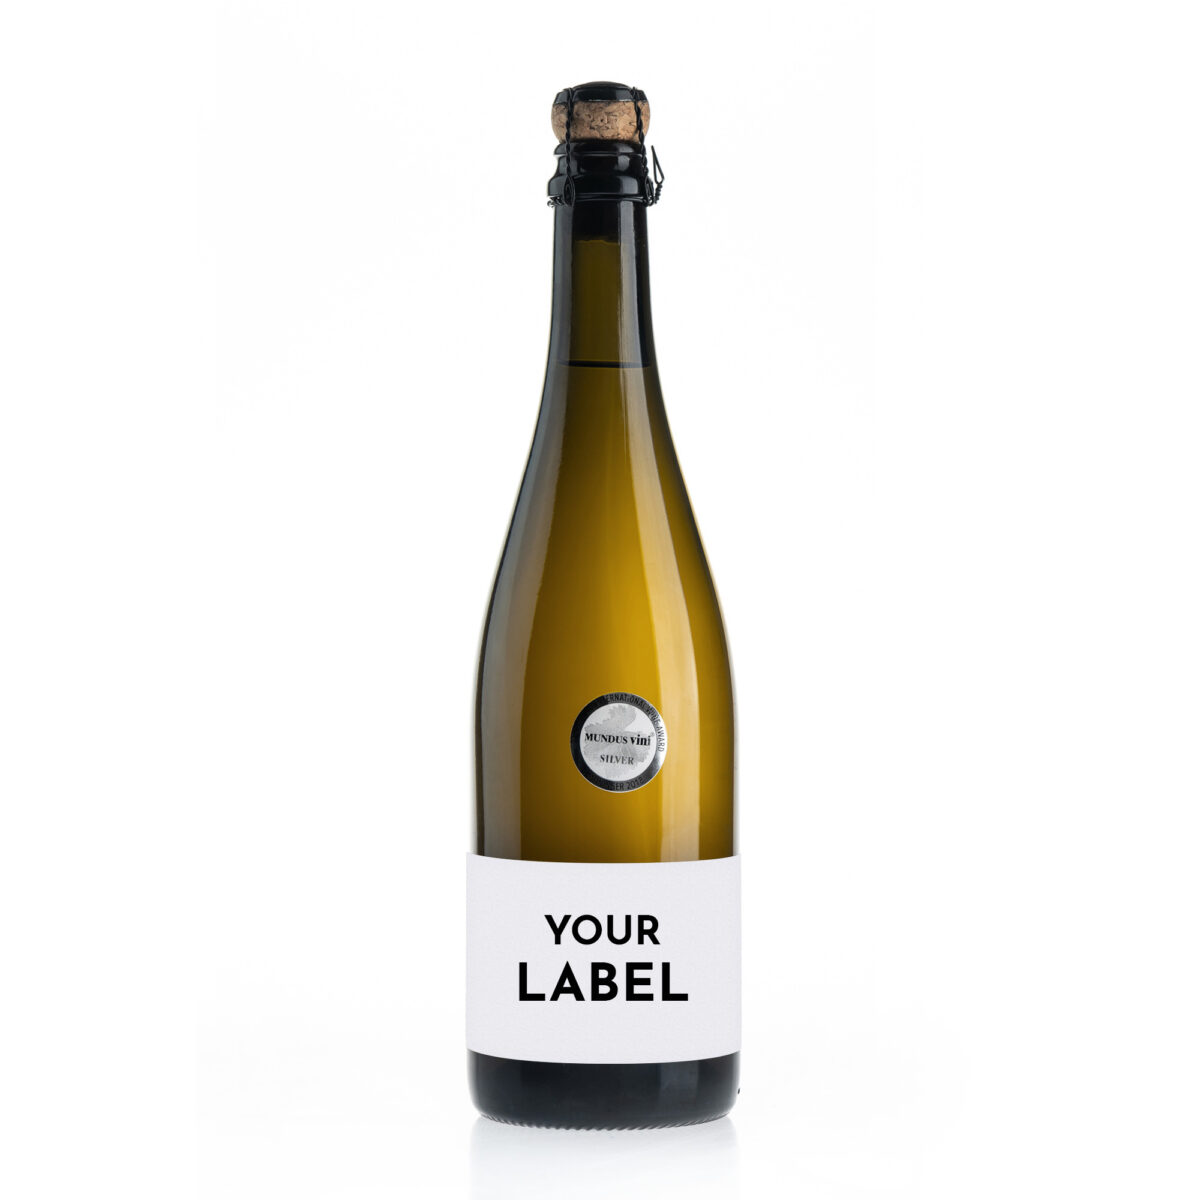 Taudtmann Riesling Sekt brut traditional bottle fermentation with own label